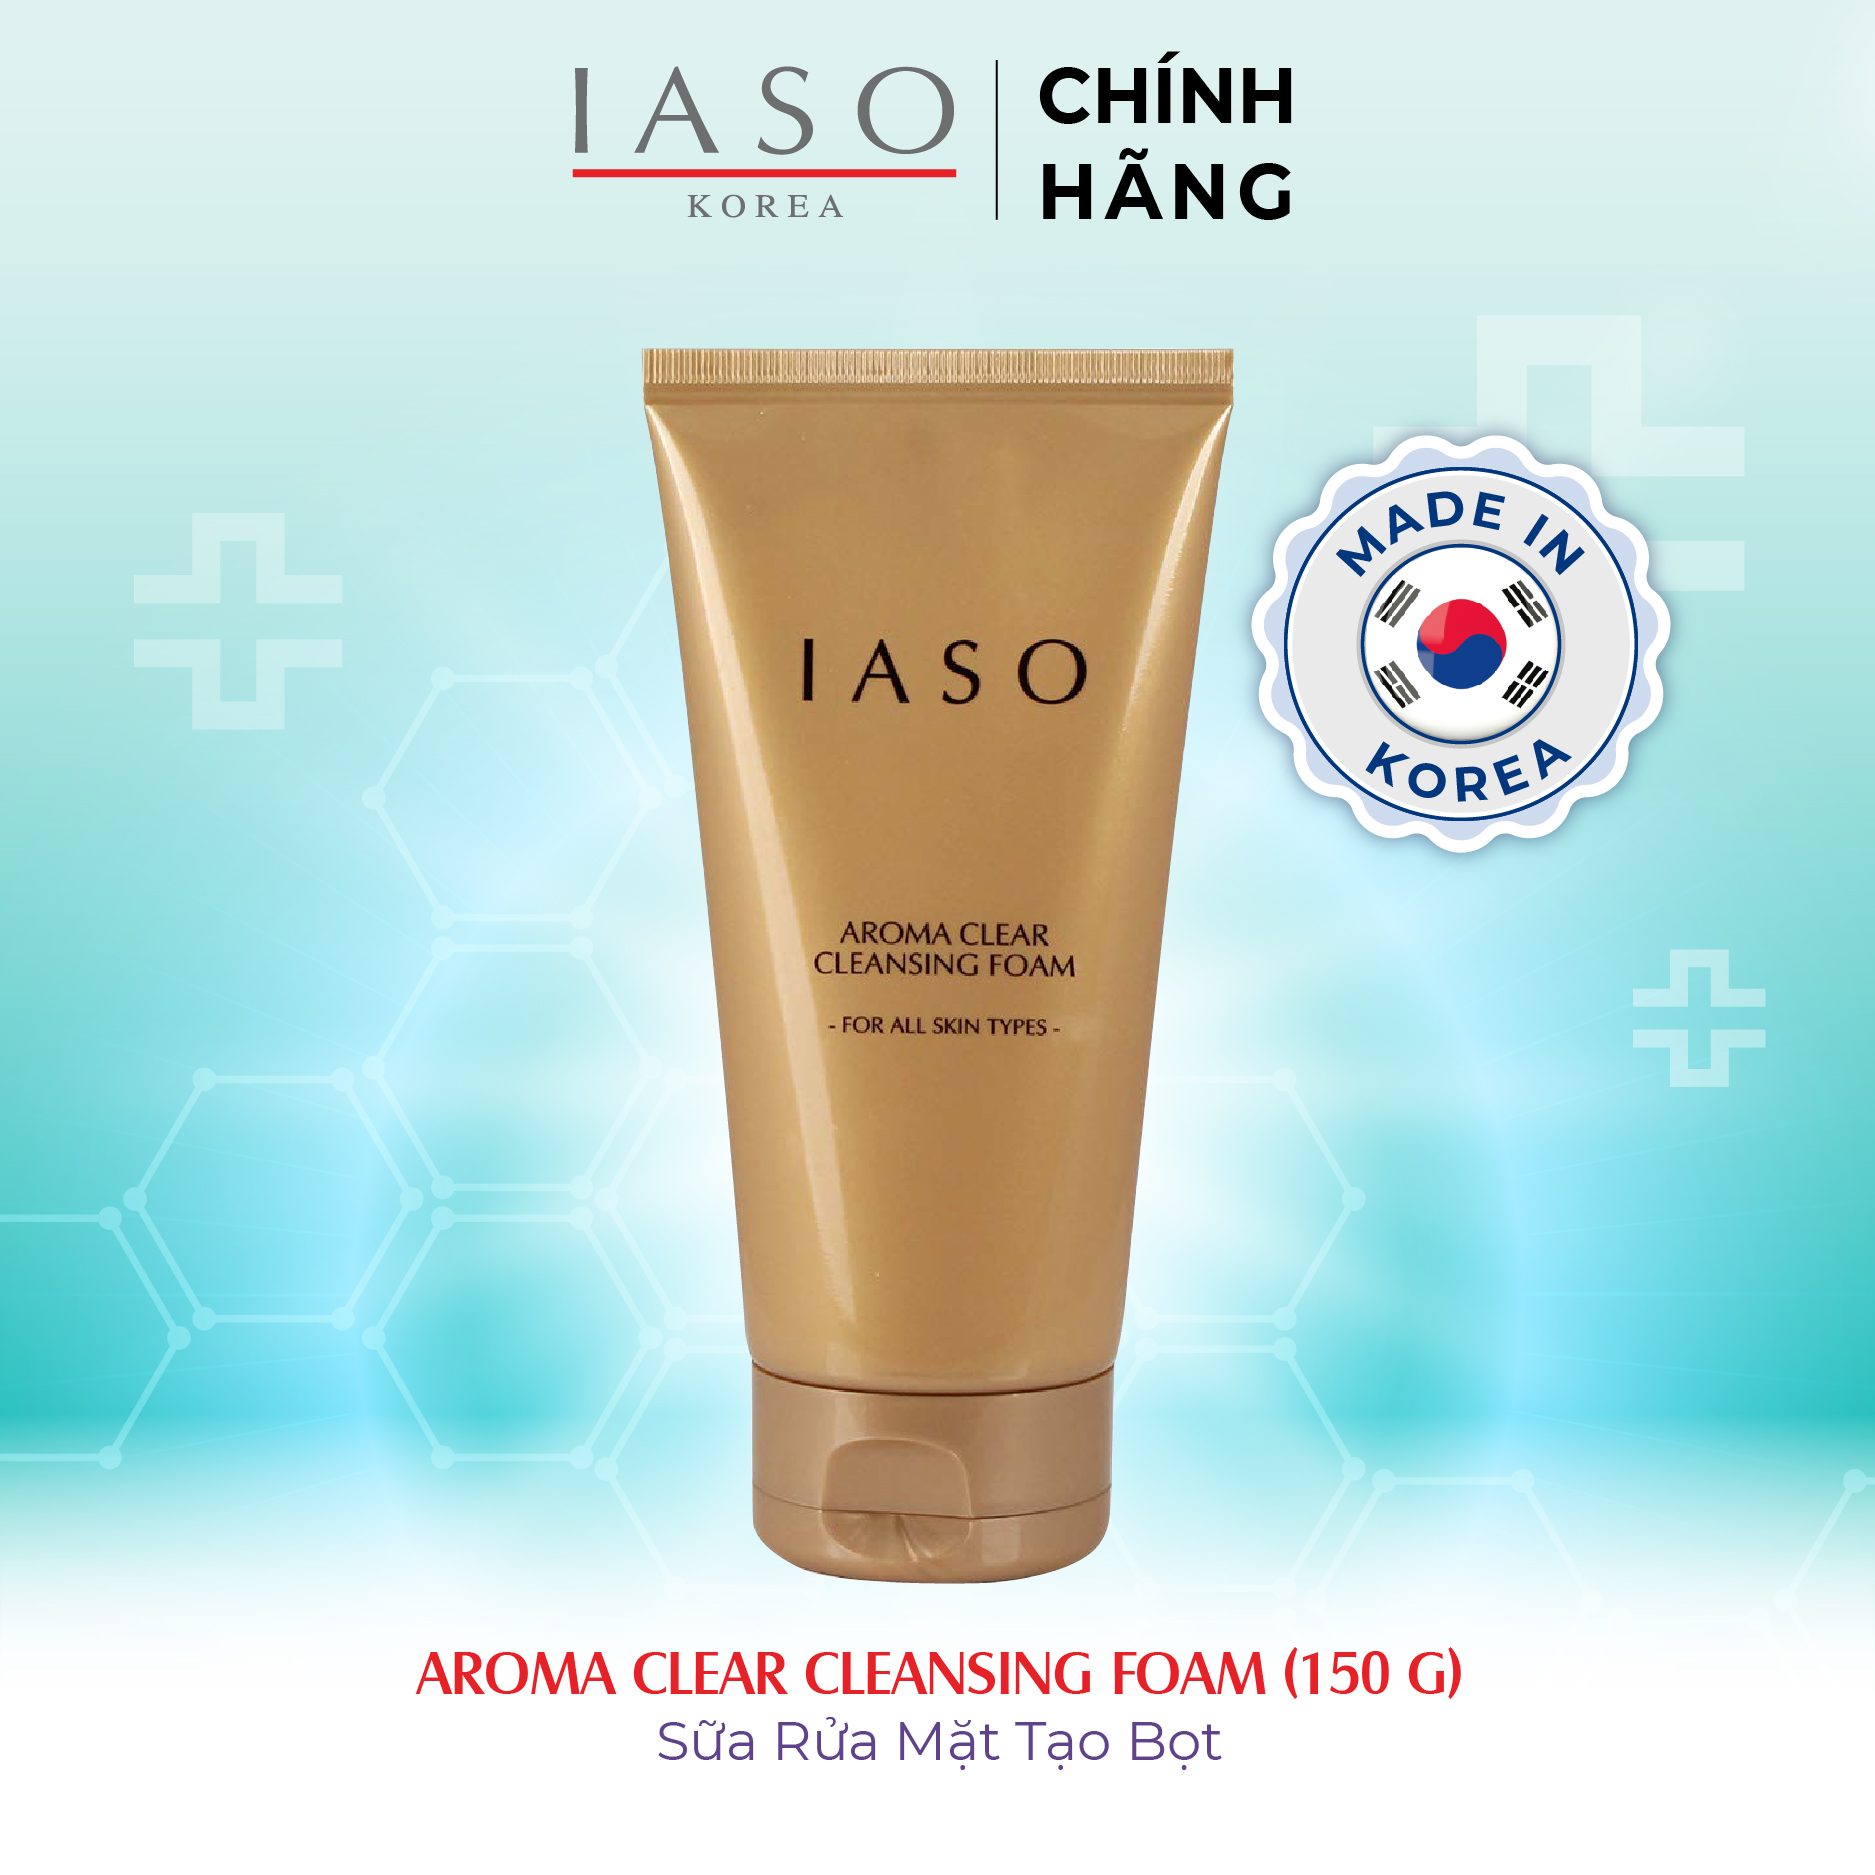 I01 Sữa rửa mặt tạo bọt IASO Aroma Clear Cleansing Foam 150g